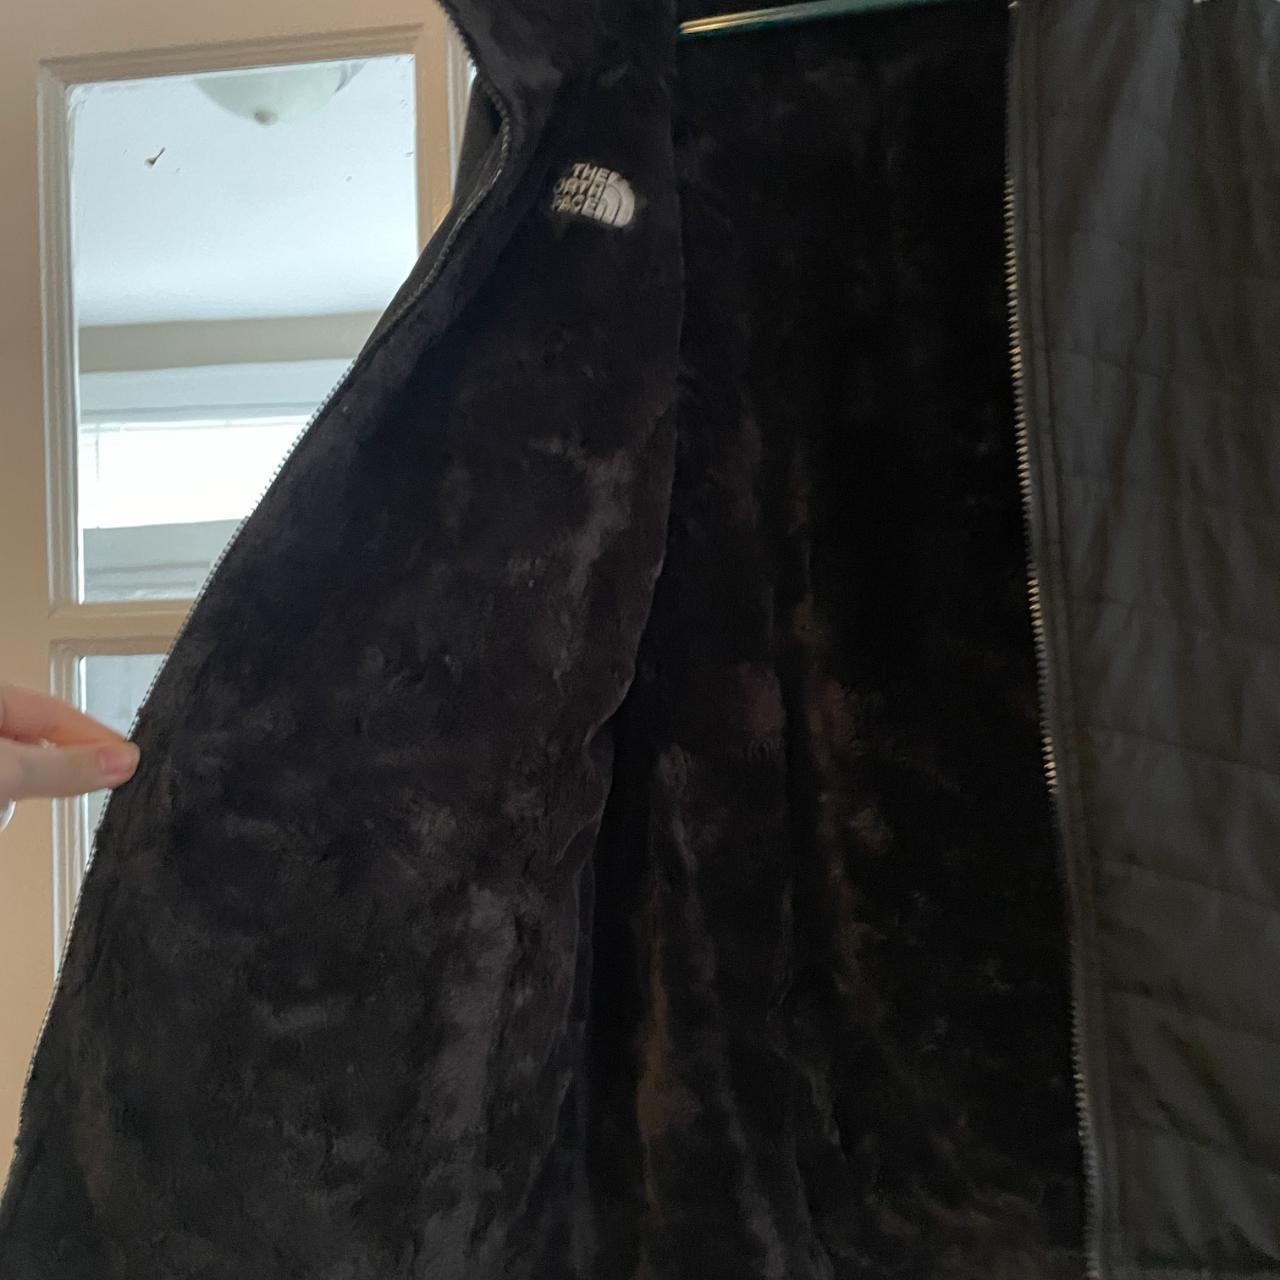 The North Face Women's Black Coat (4)